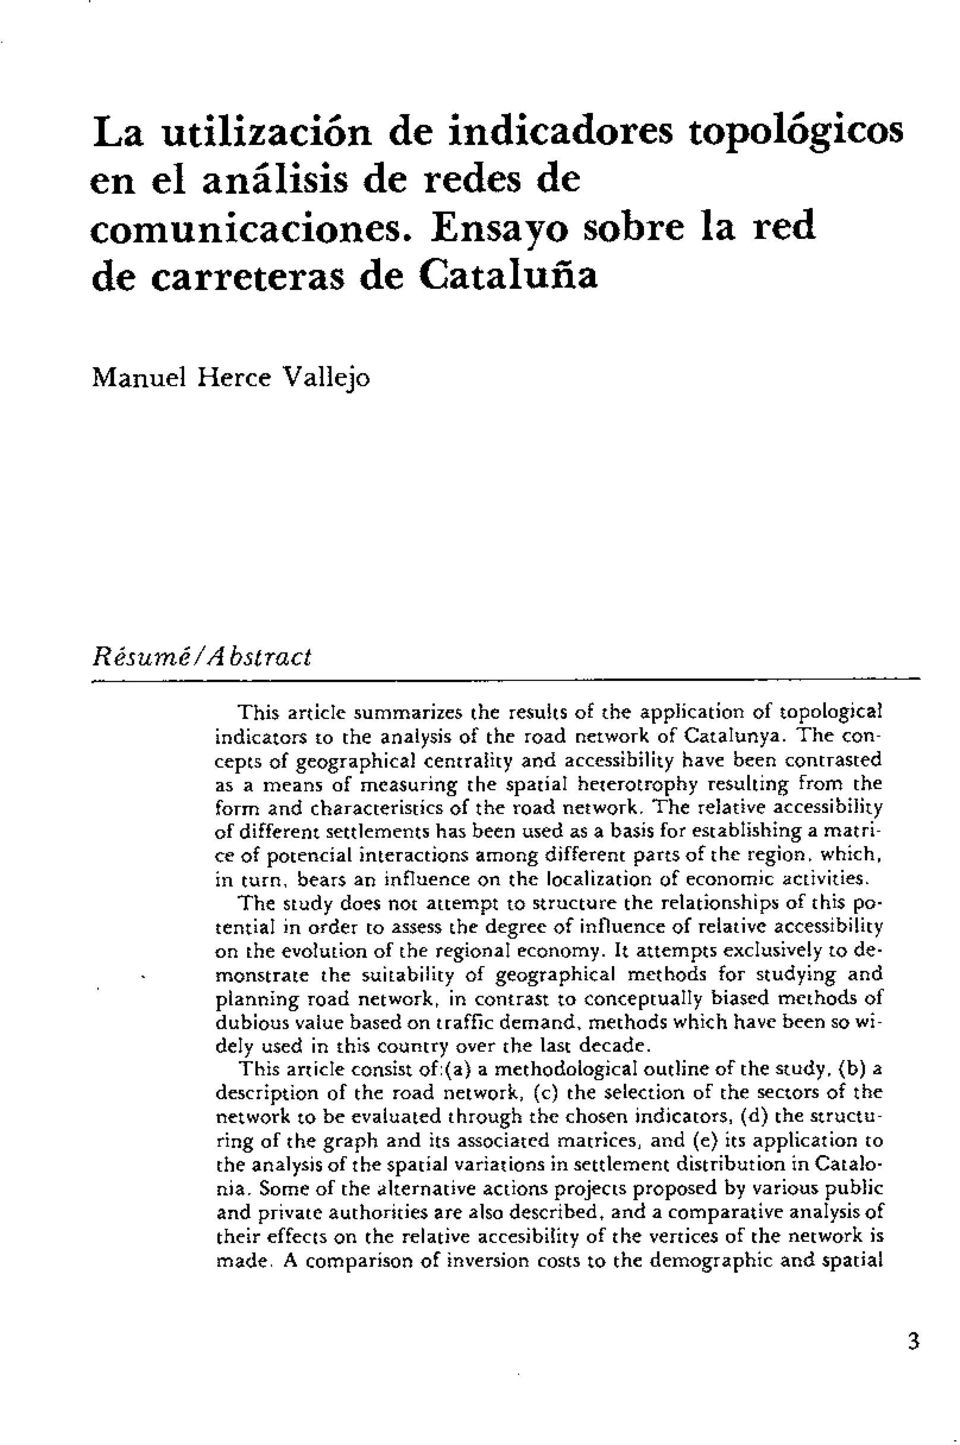 network of Catalunya.